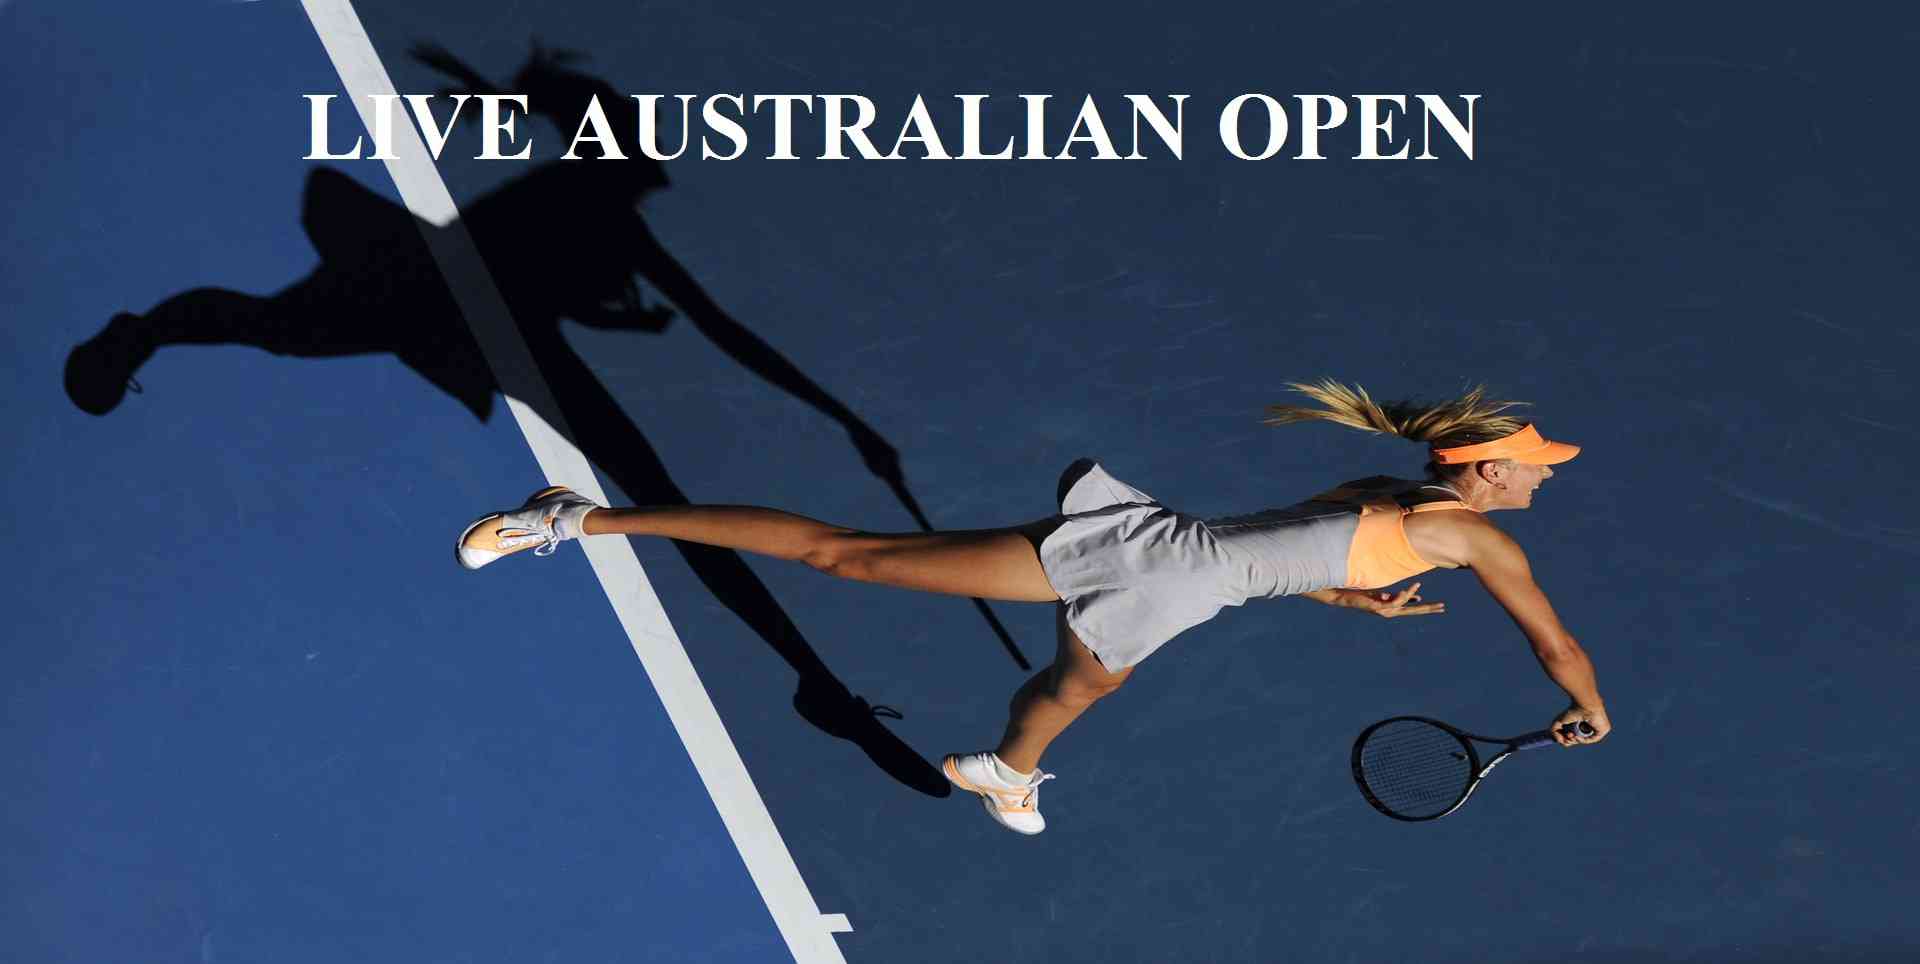 Australian Open 2017 round 4 live